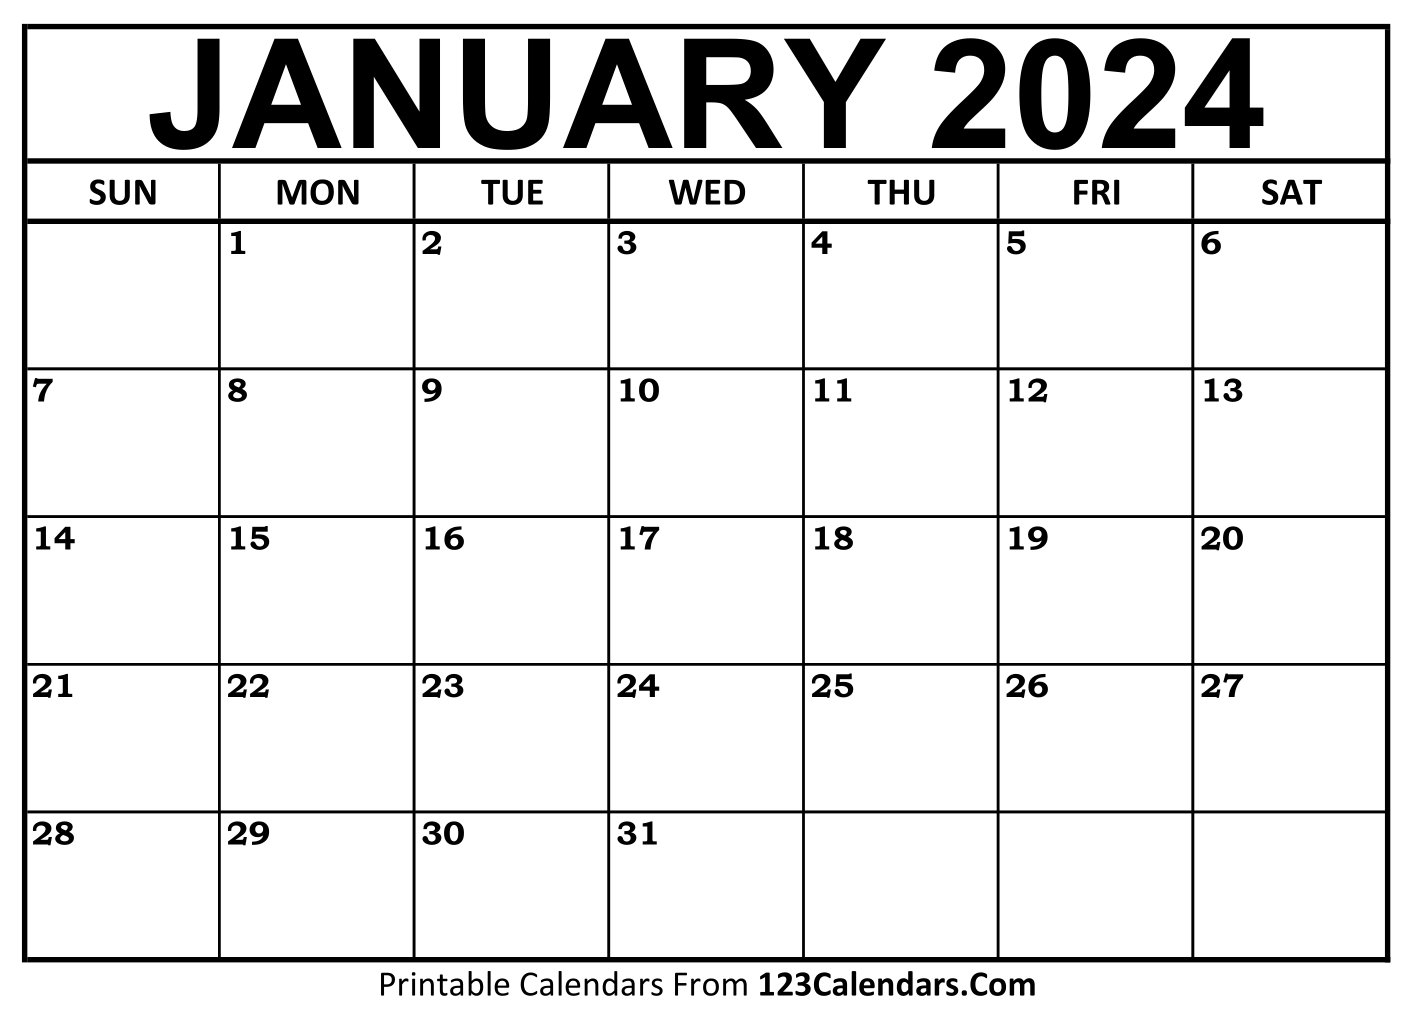 Printable January 2024 Calendar Templates - 123Calendars for Calendar 2024 January Printable